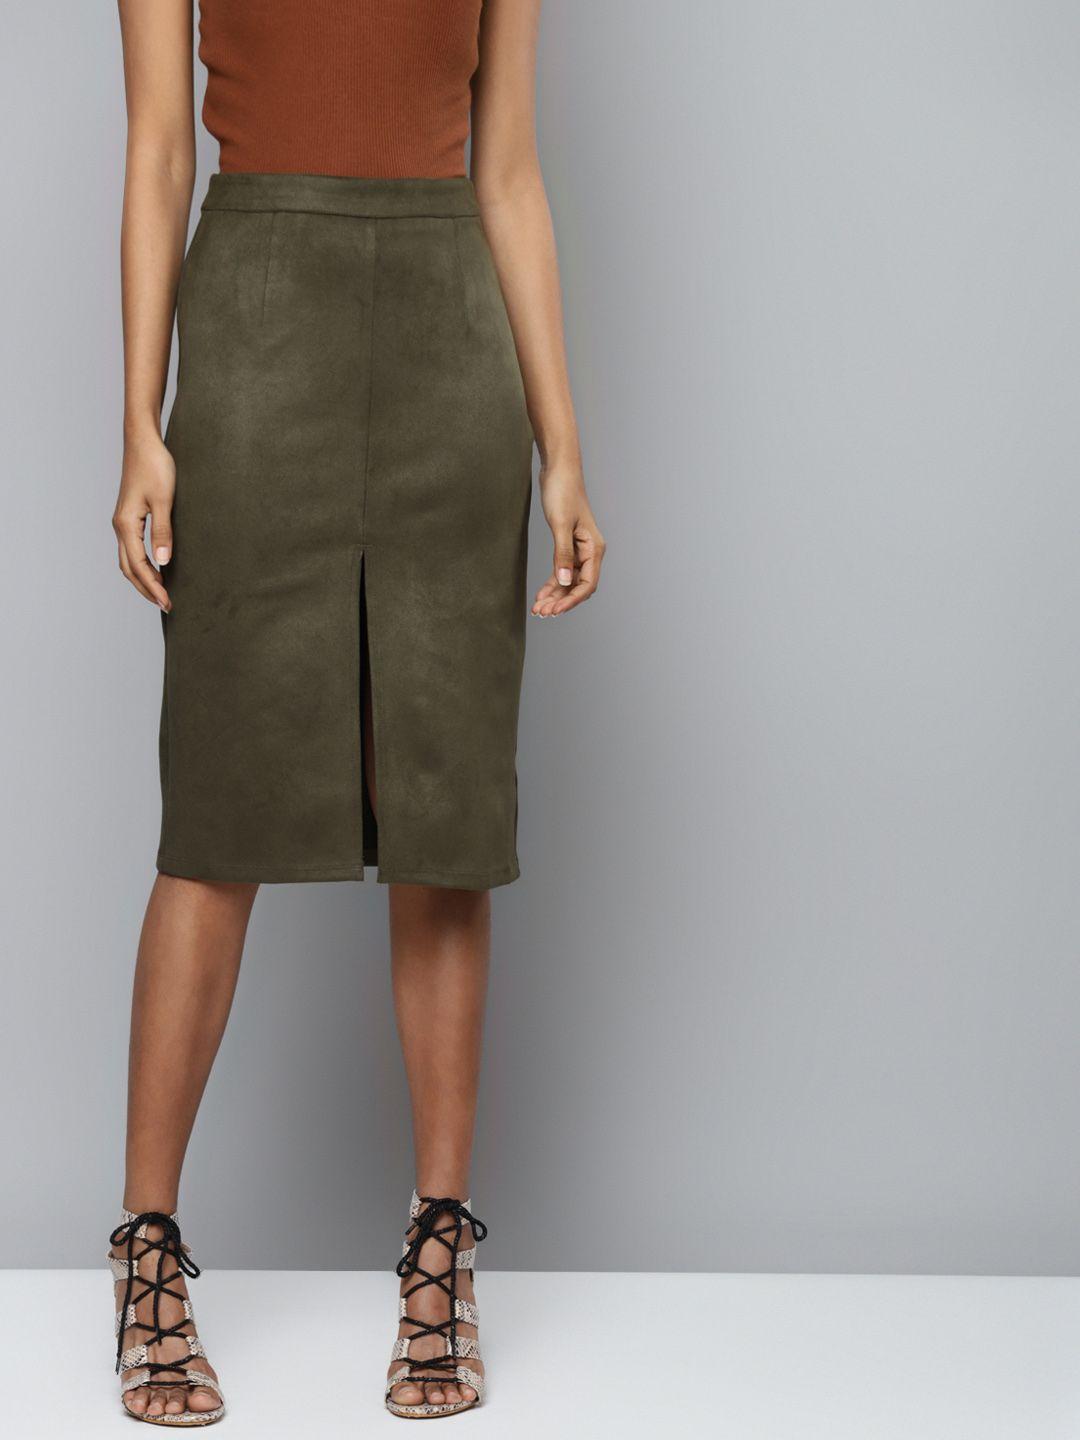 sassafras women olive green suede pencil skirt